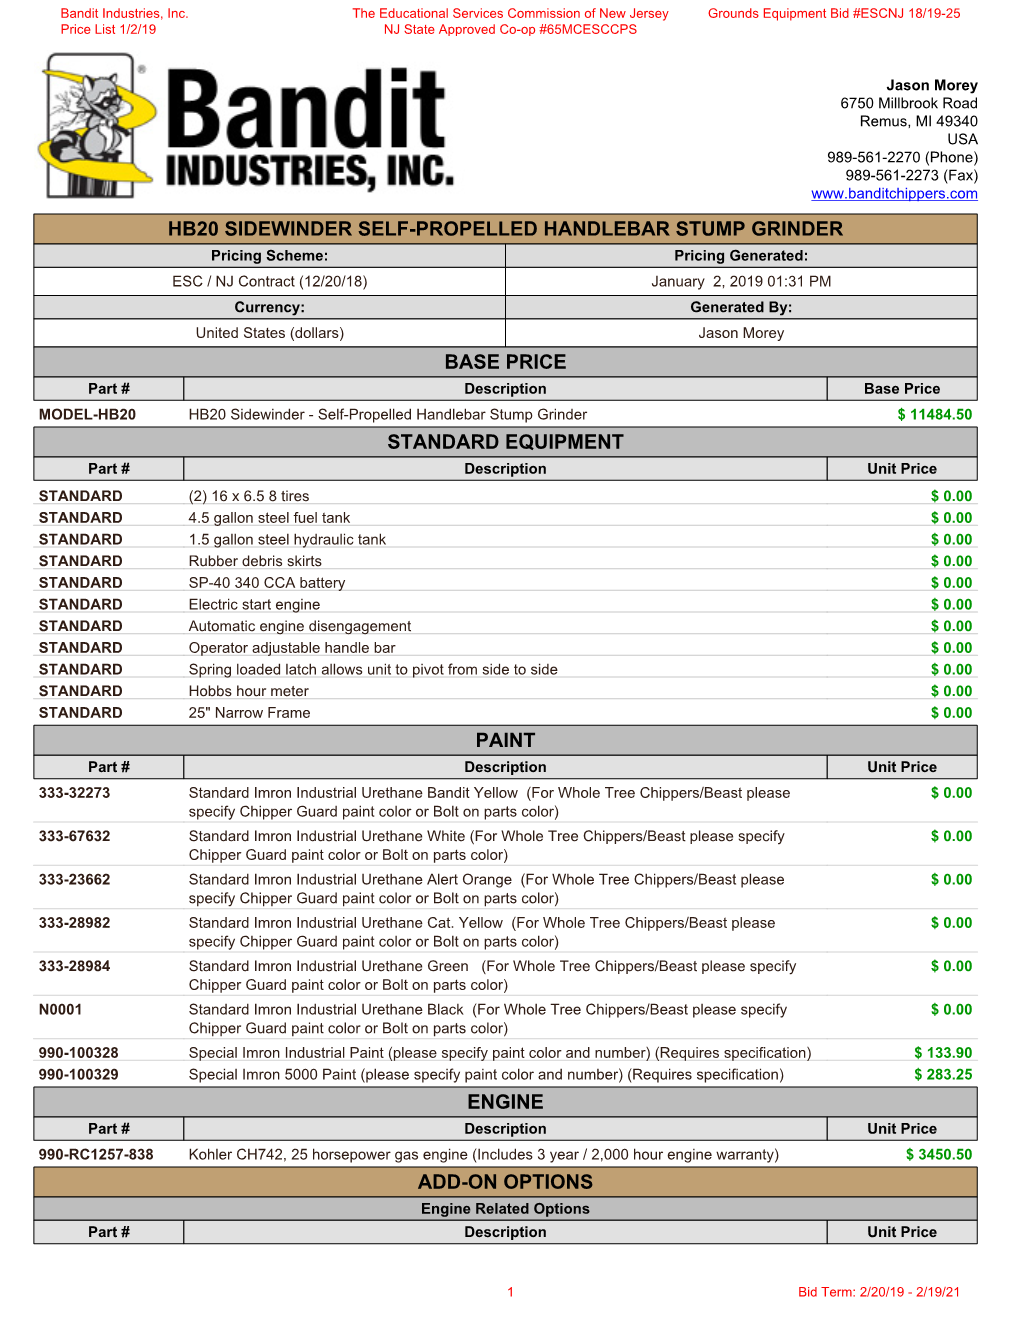 Bandit Industries, Inc. Price List 1/2/19